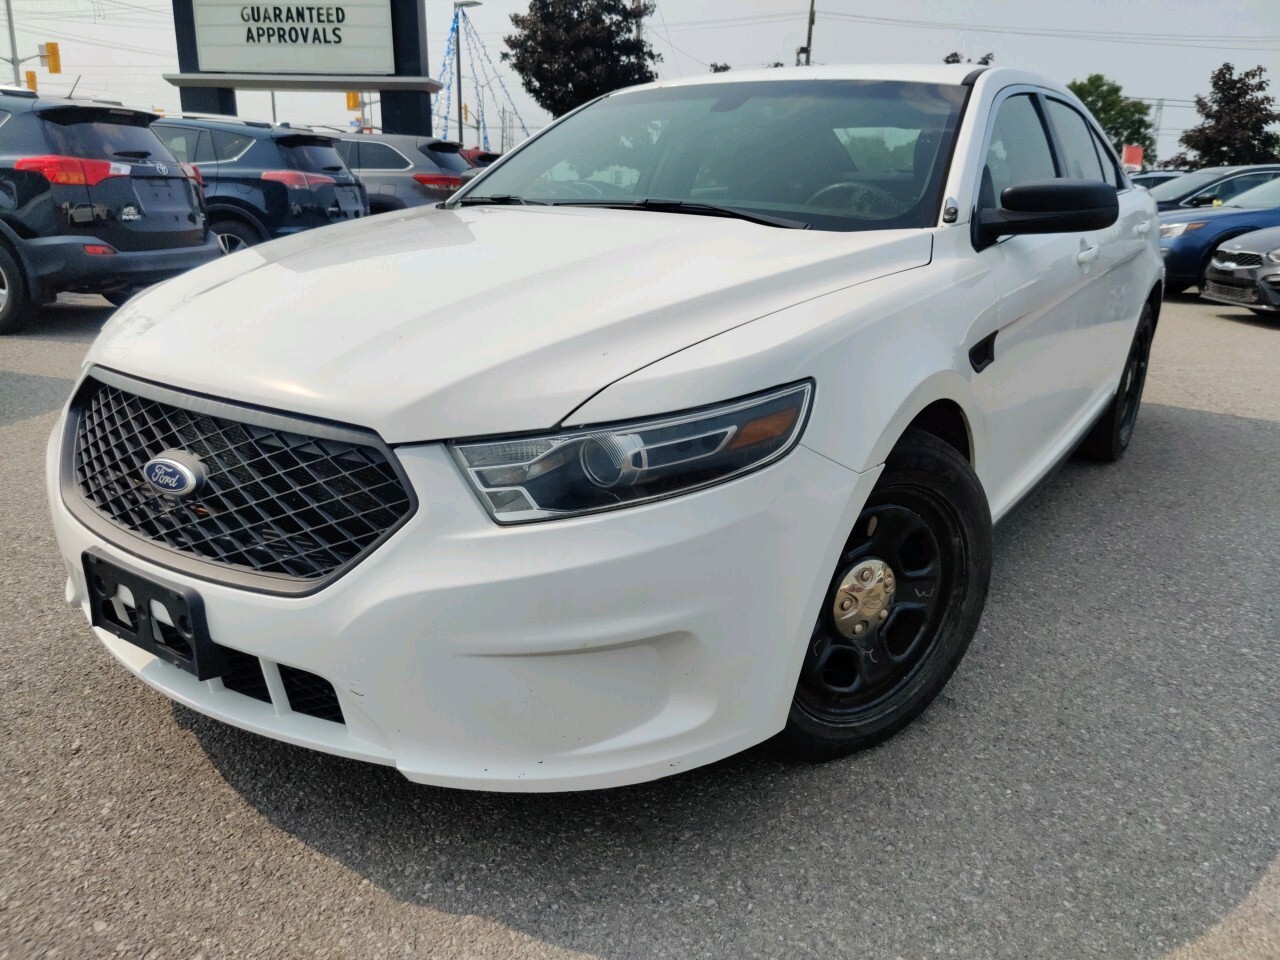 2015 Ford Police Interceptor Sedan 